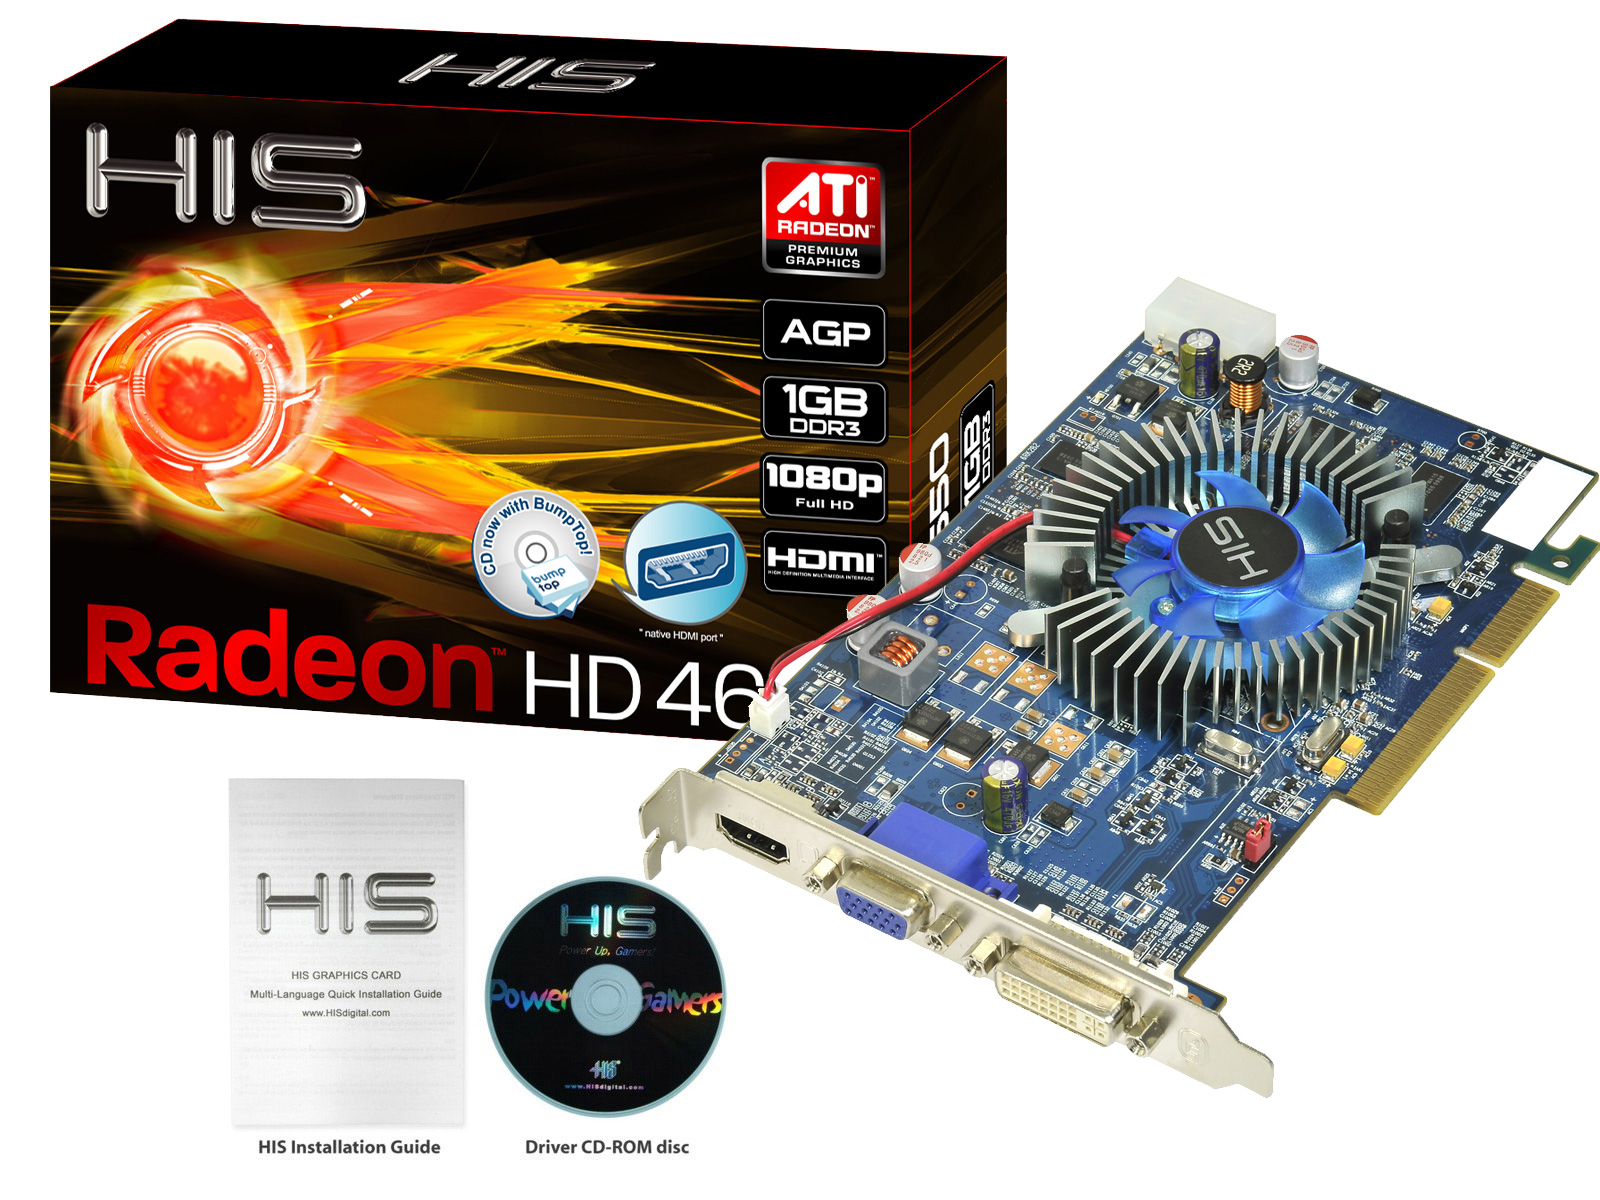 HD 4650 Fan Native HDMI 1GB (128bit) DDR3 AGP (600Mhz Core/1.3Ghz Memory ) < AGP Edition < Desktop graphics < | HIS Graphic Cards